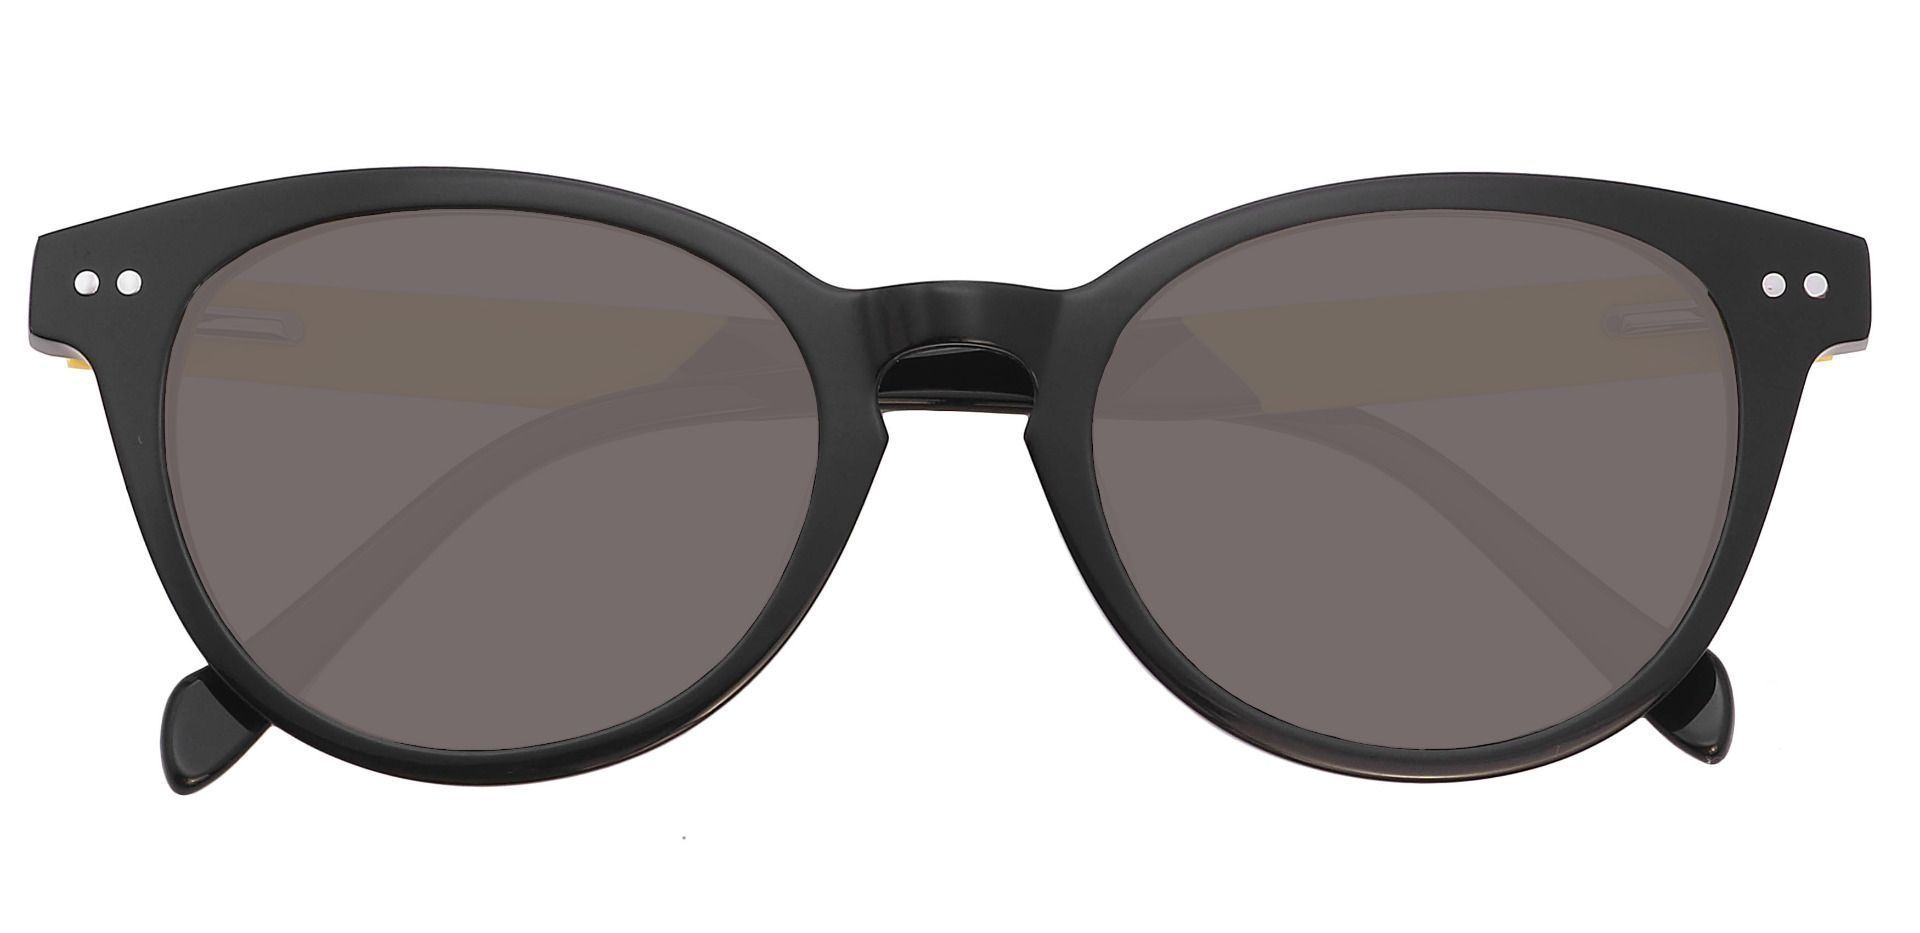 Forbes Oval Prescription Sunglasses - Black Frame With Gray Lenses